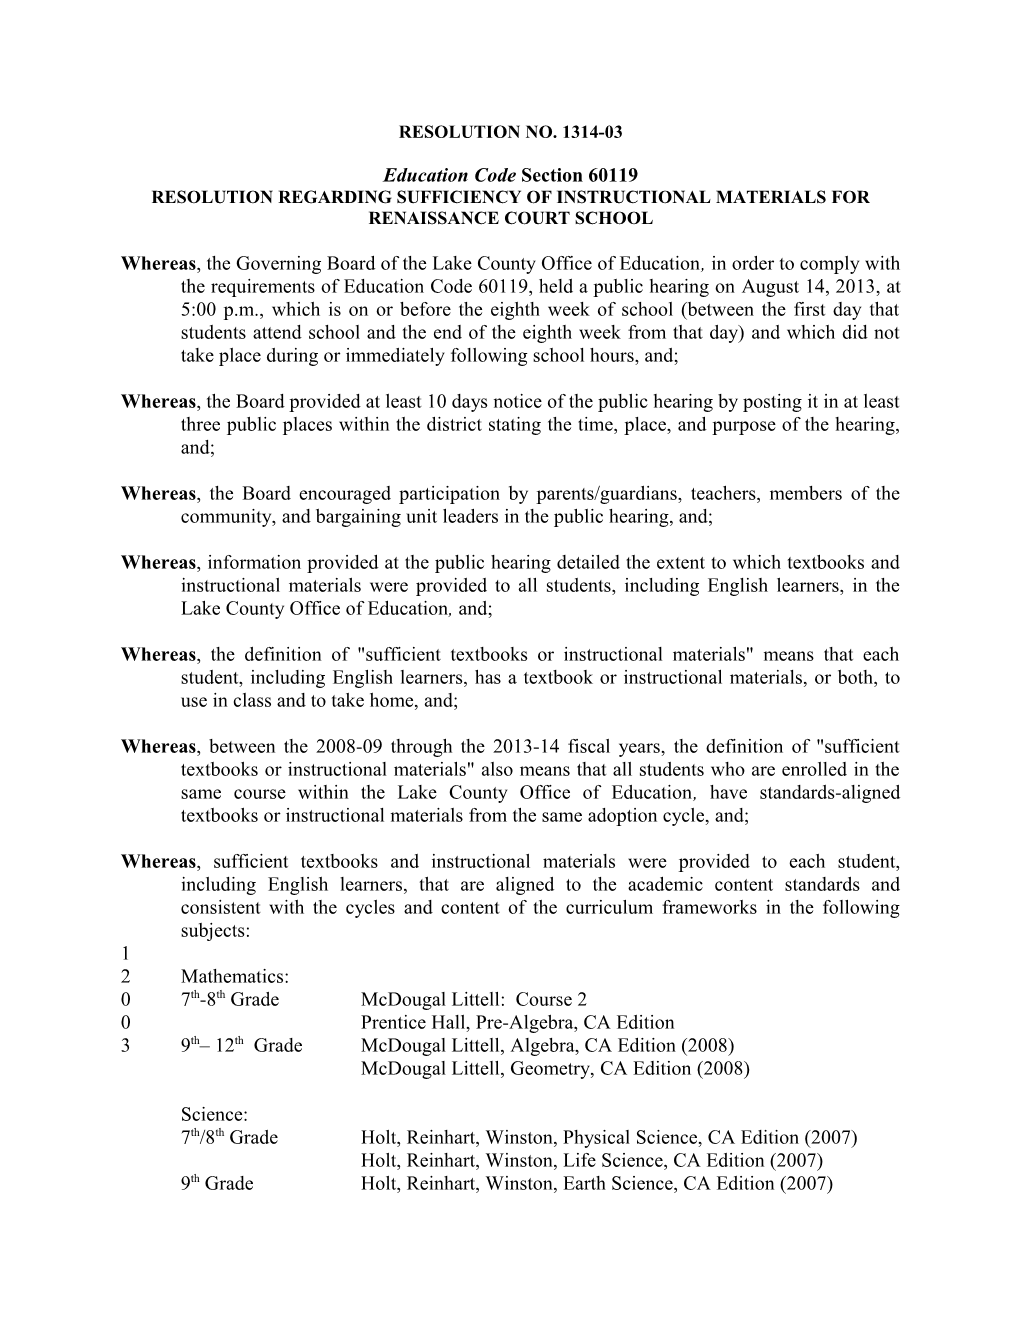 Resolution Regarding Sufficiency of Instructional Materialsforrenaissancecourtschool